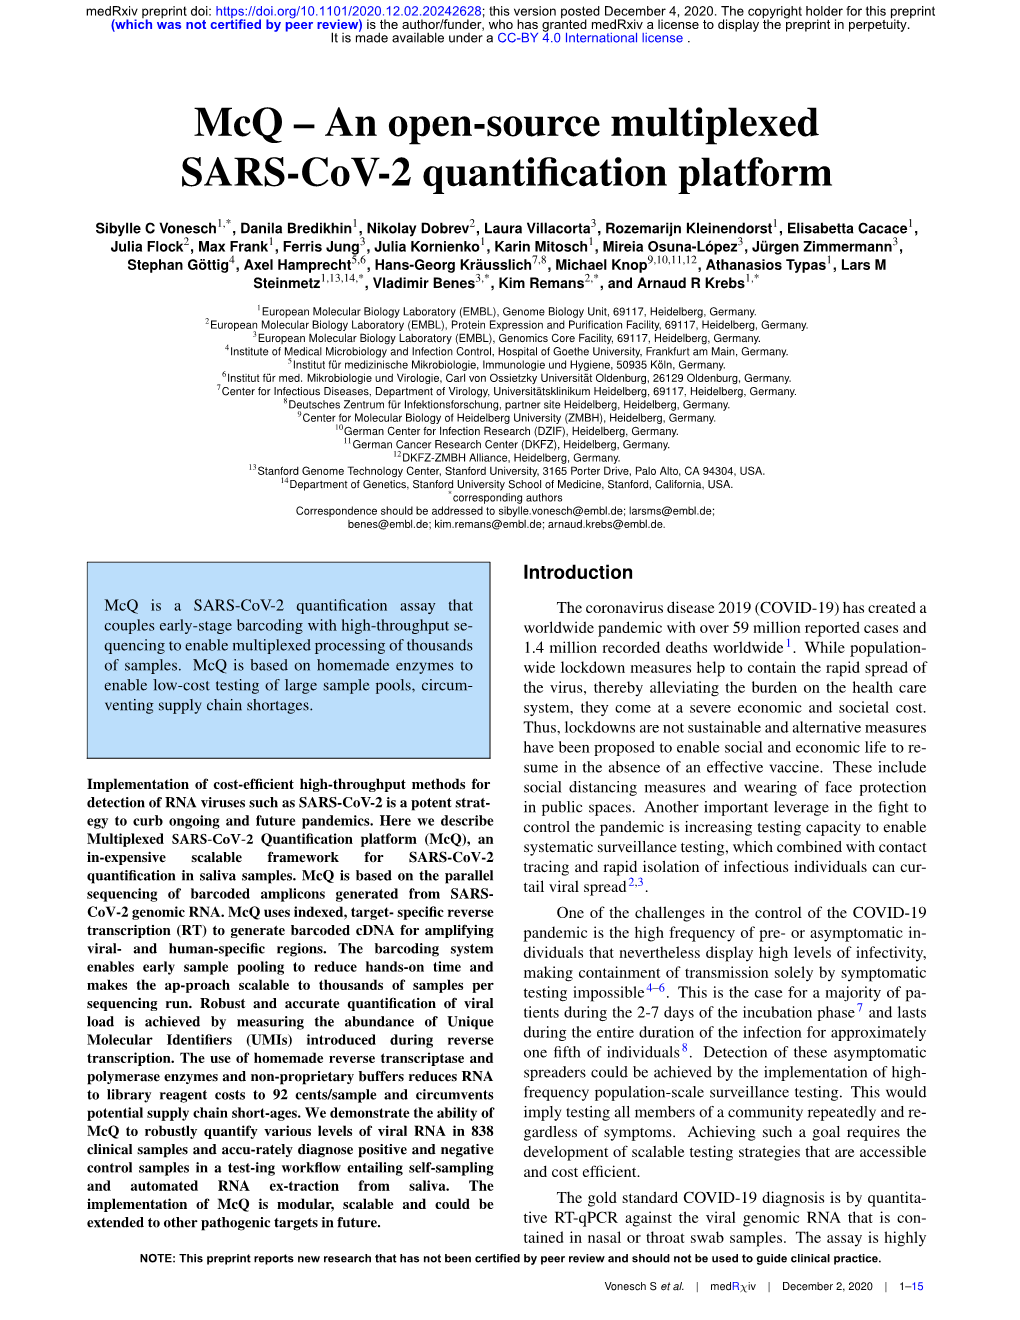 Mcq – an Open-Source Multiplexed SARS-Cov-2 Quantiﬁcation Platform